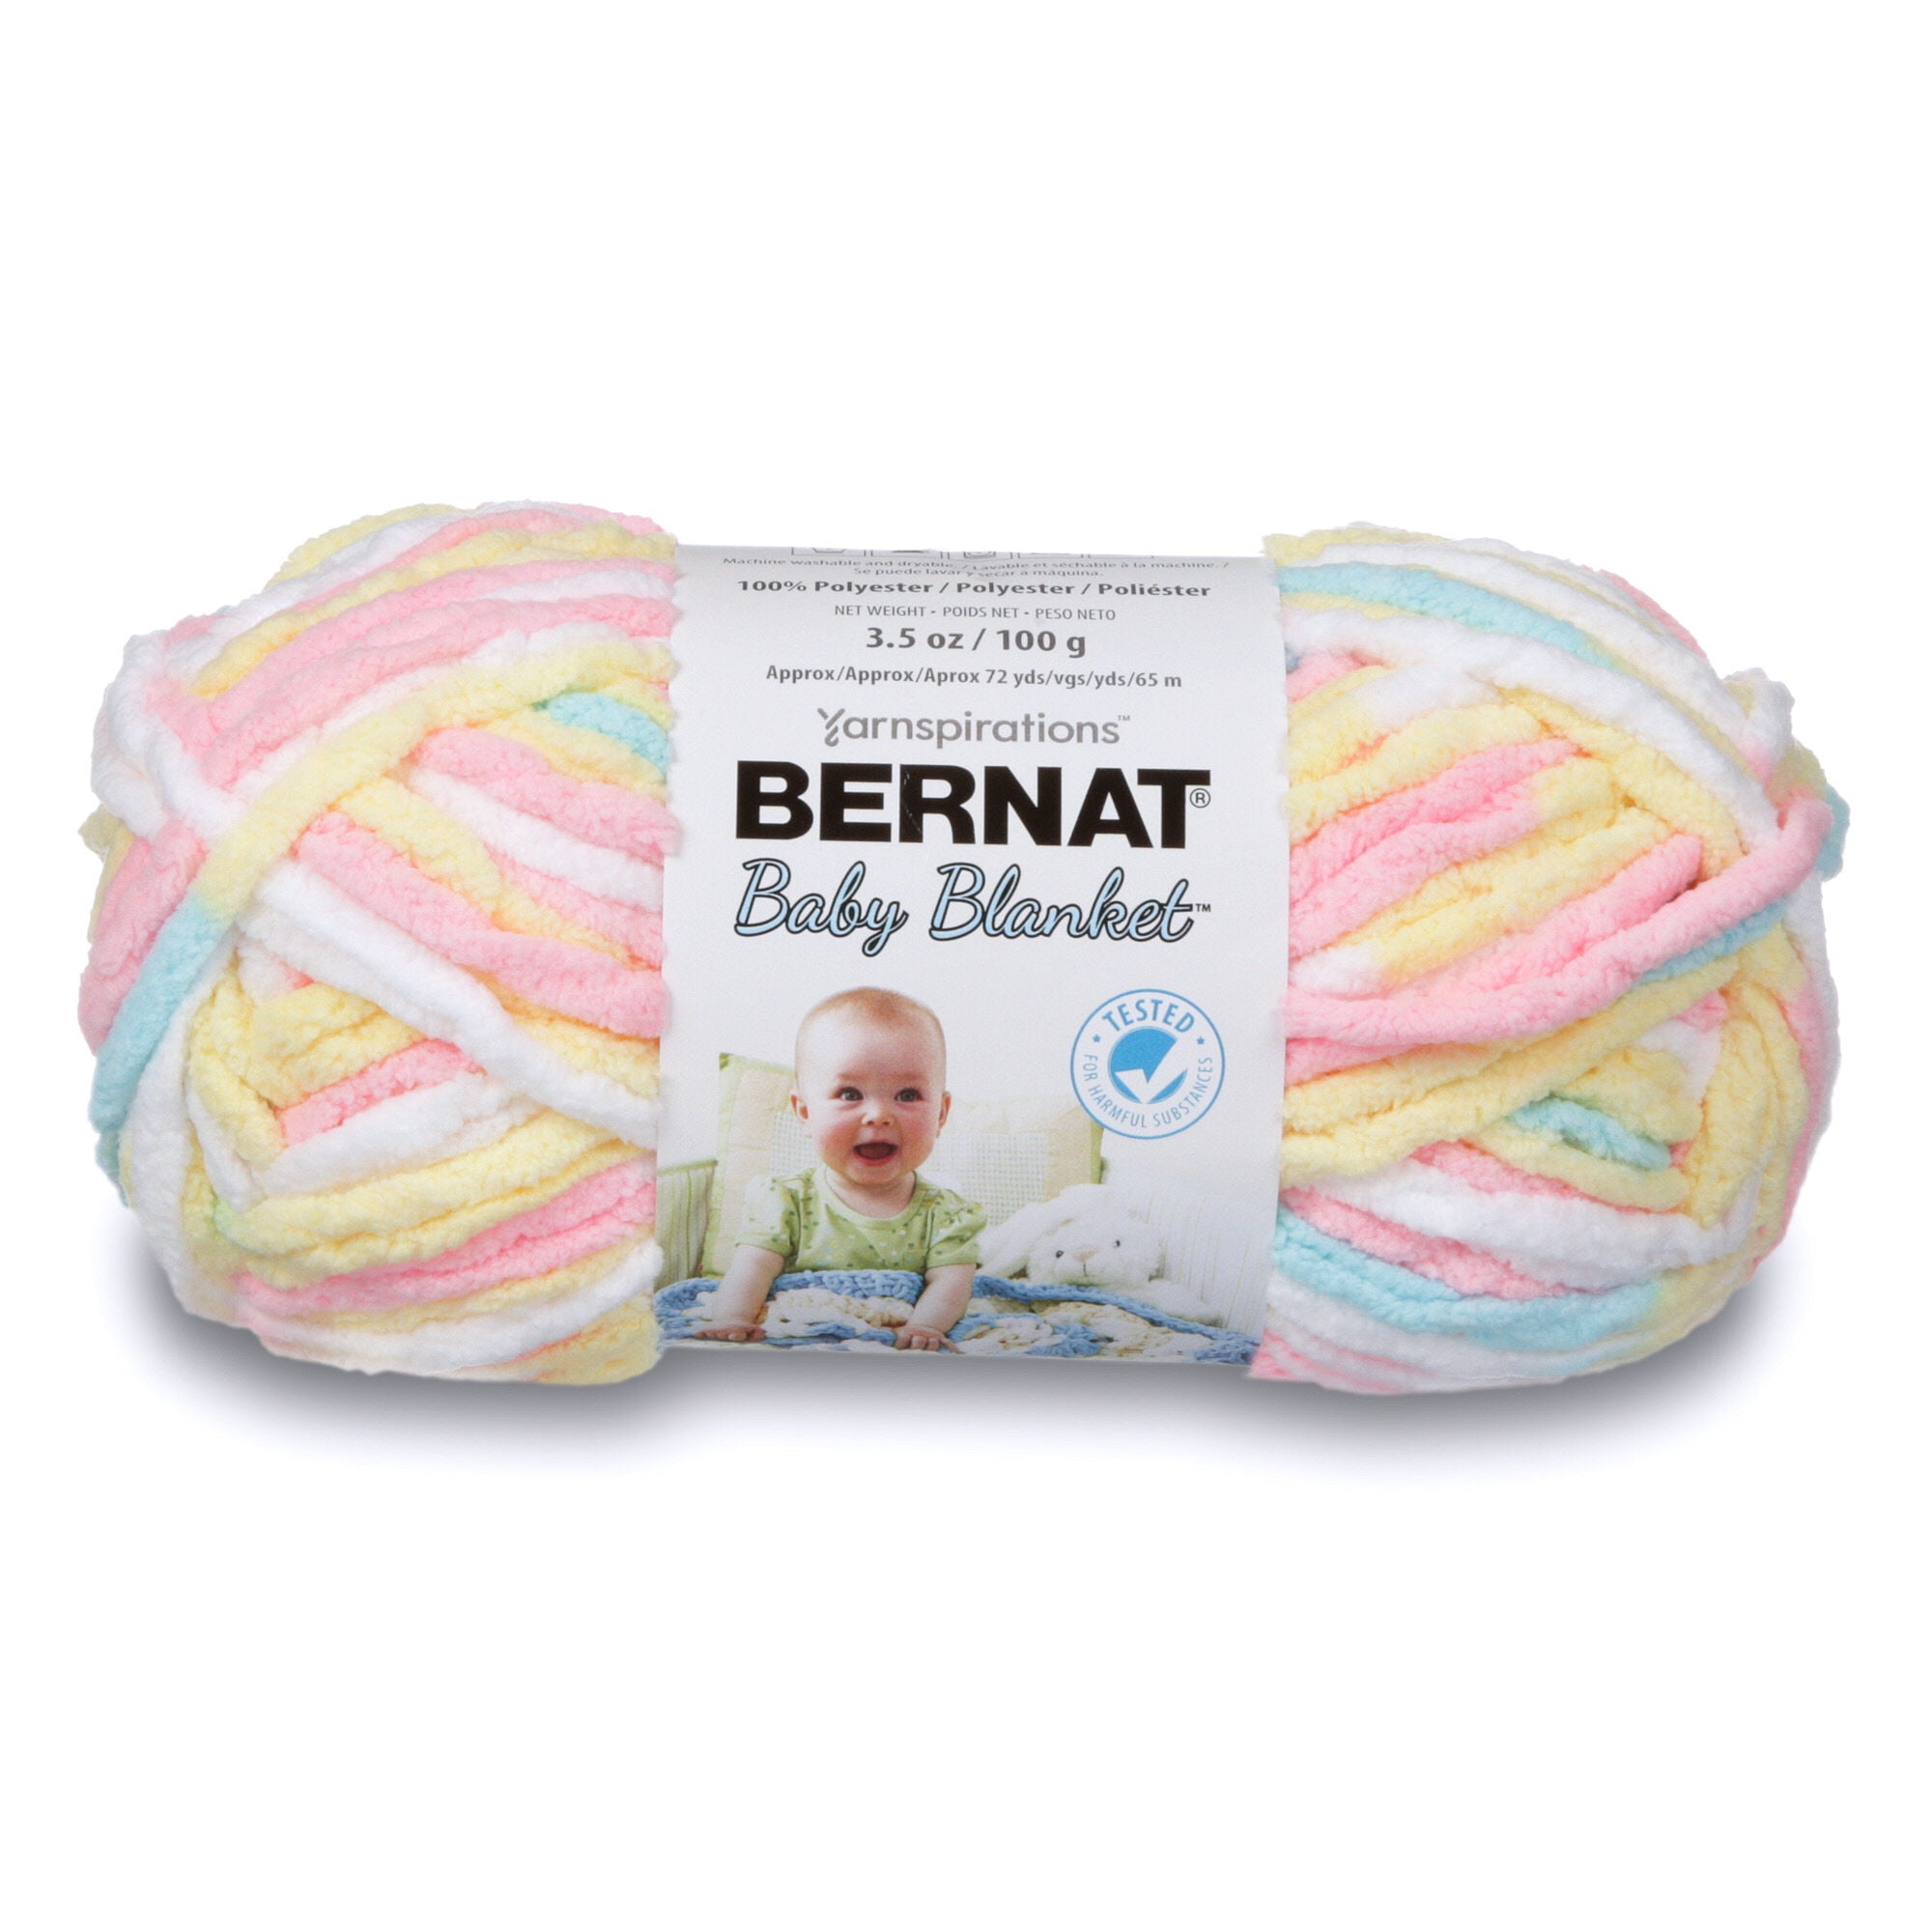 Bernat Blanket Big Ball Yarn- Pitter Patter Pink yellow, blue